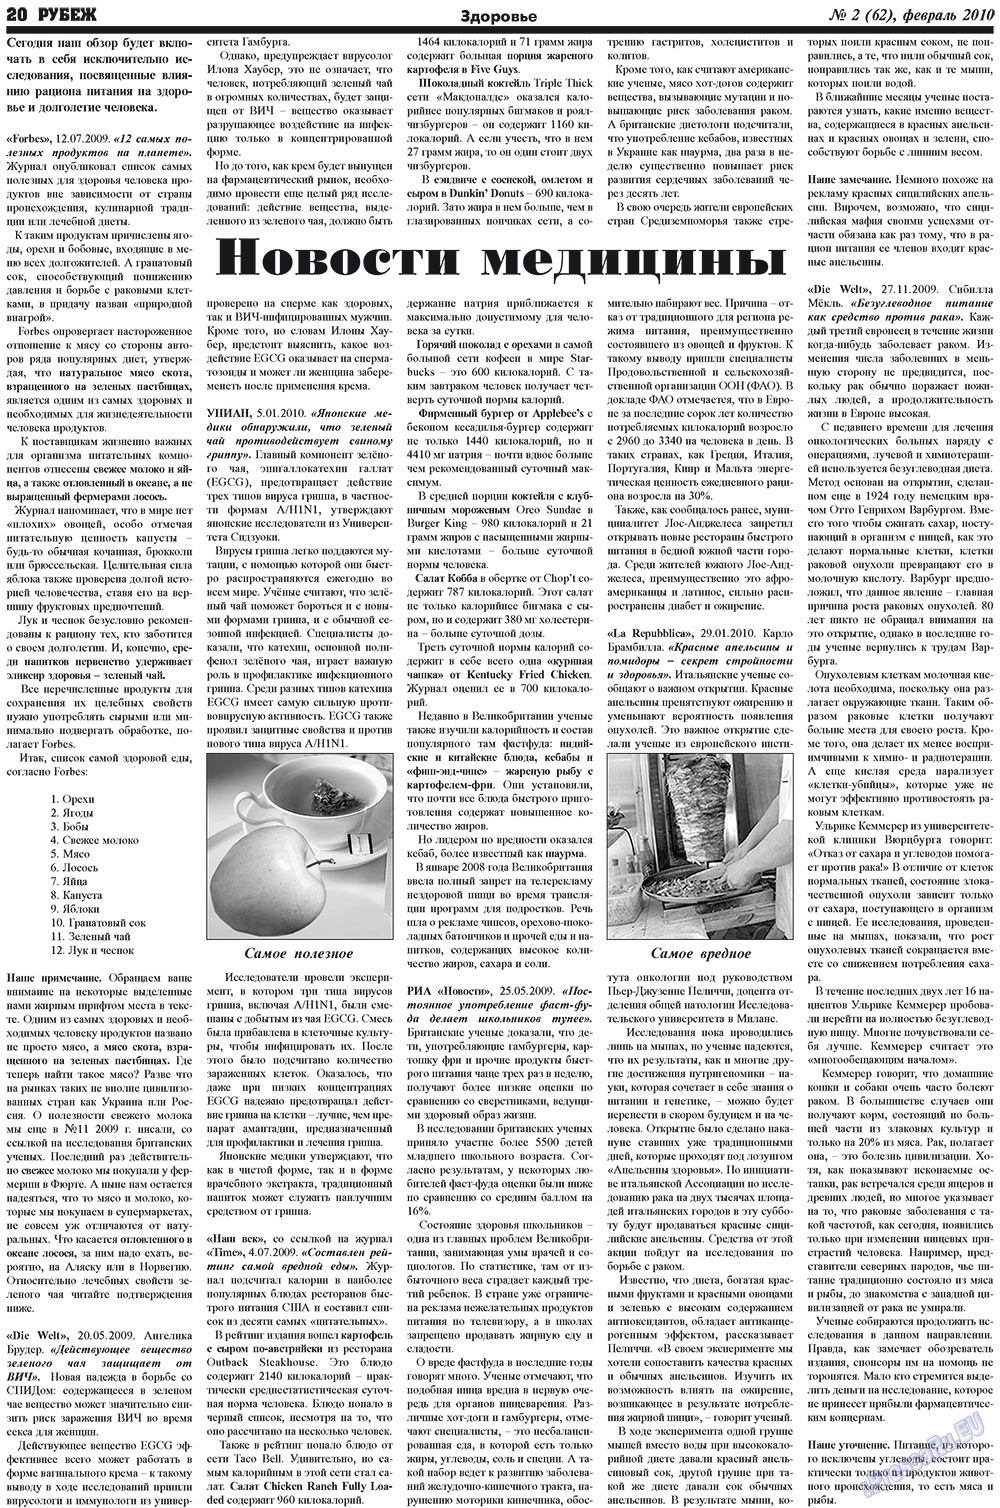 Рубеж, газета. 2010 №2 стр.20